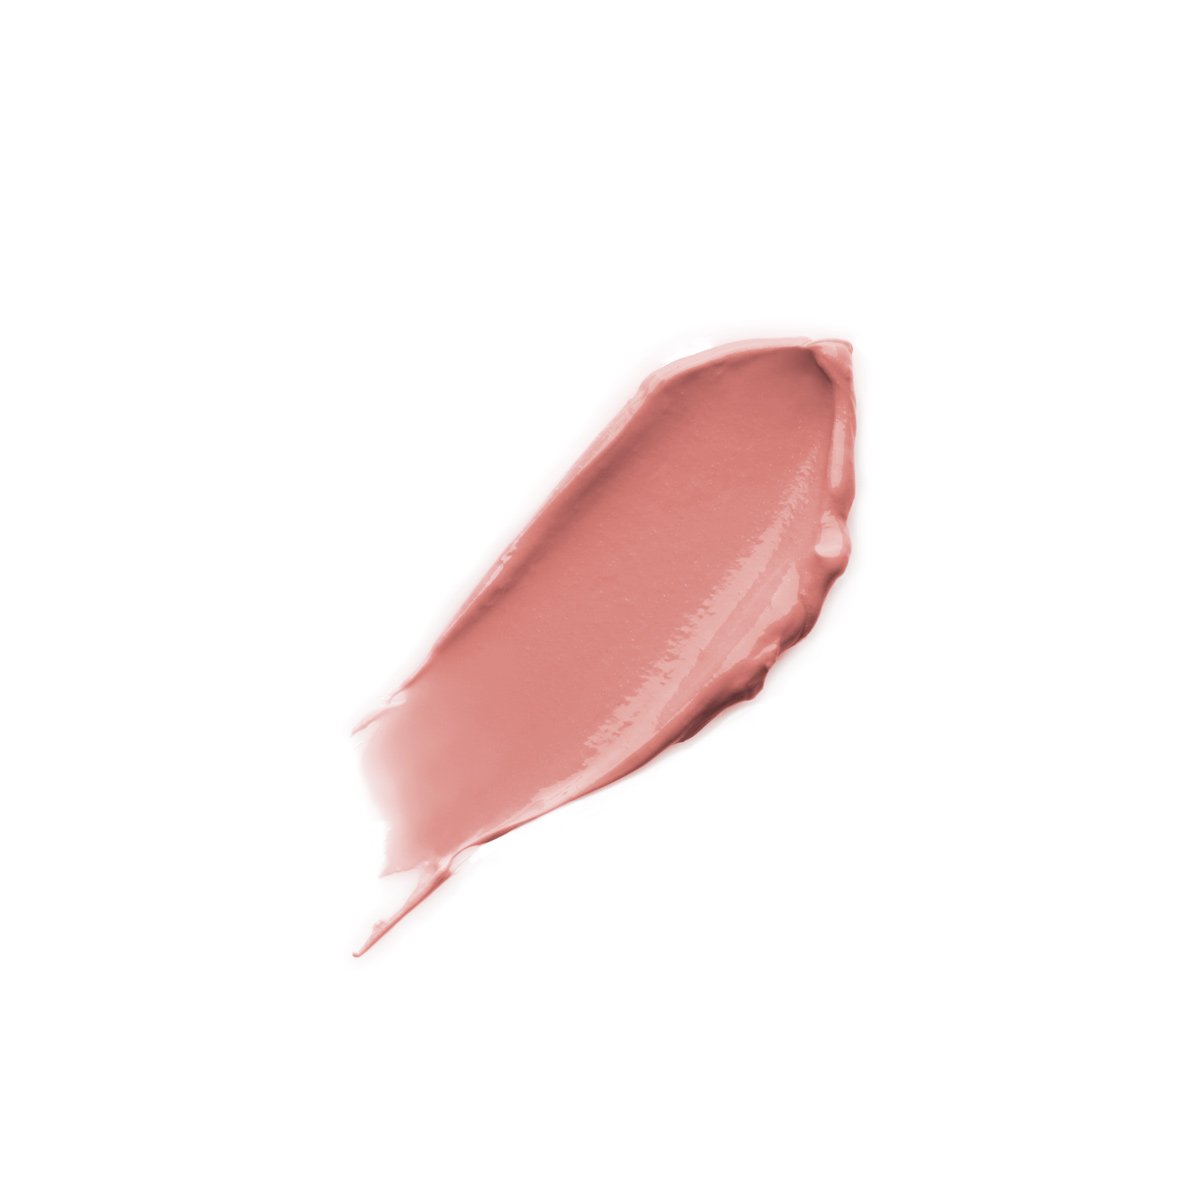 NU DE SOLEIL - PEACHY BEIGE - peachy beige lipstick lip balm